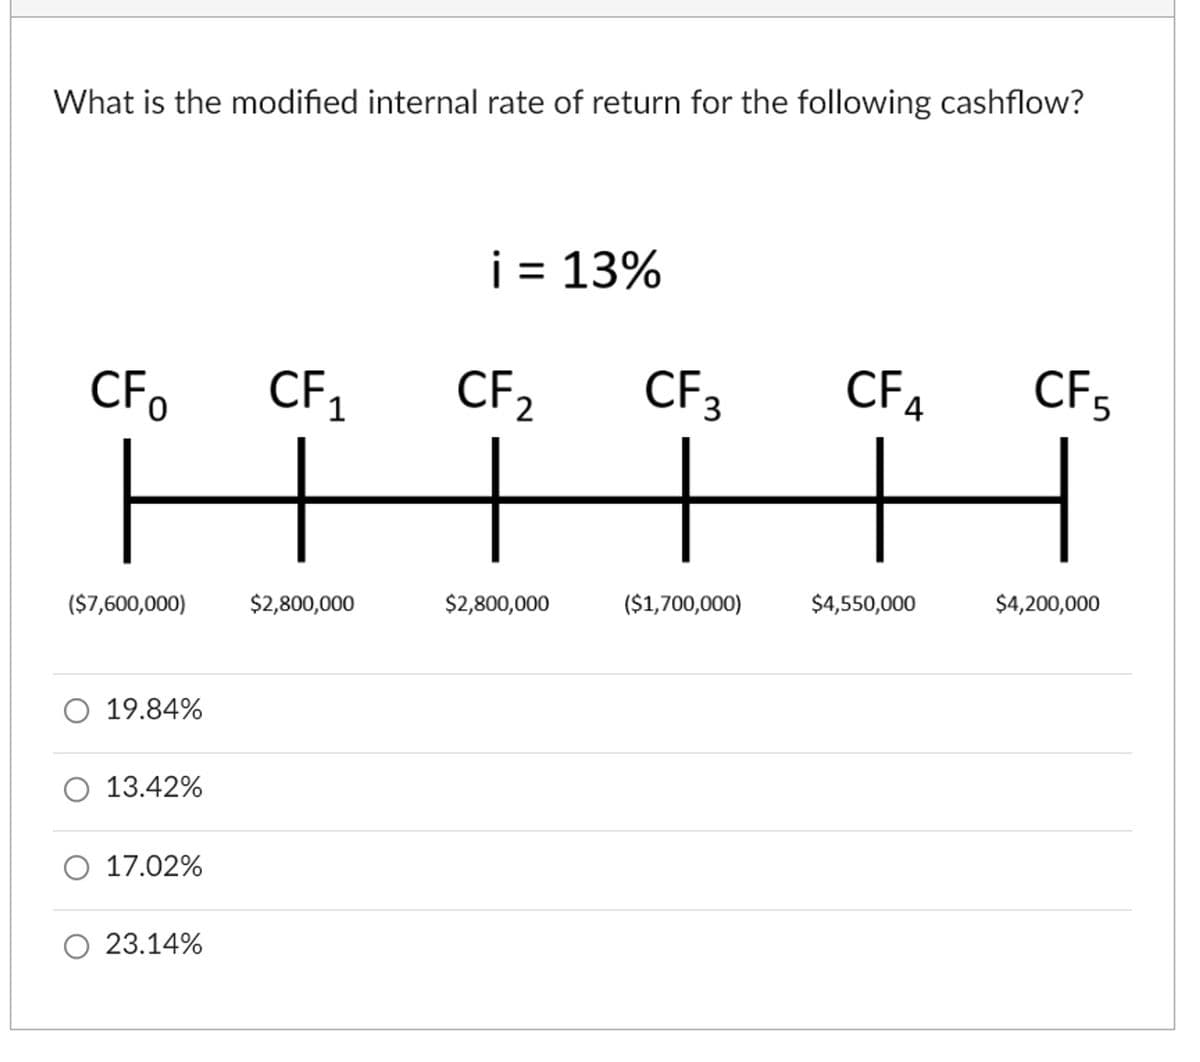 What is the modified internal rate of return for the following cashflow?
CFO
($7,600,000)
19.84%
13.42%
17.02%
23.14%
CF₁
$2,800,000
i = 13%
CF₂
$2,800,000
CF 3
($1,700,000)
CFA
$4,550,000
CF5
$4,200,000